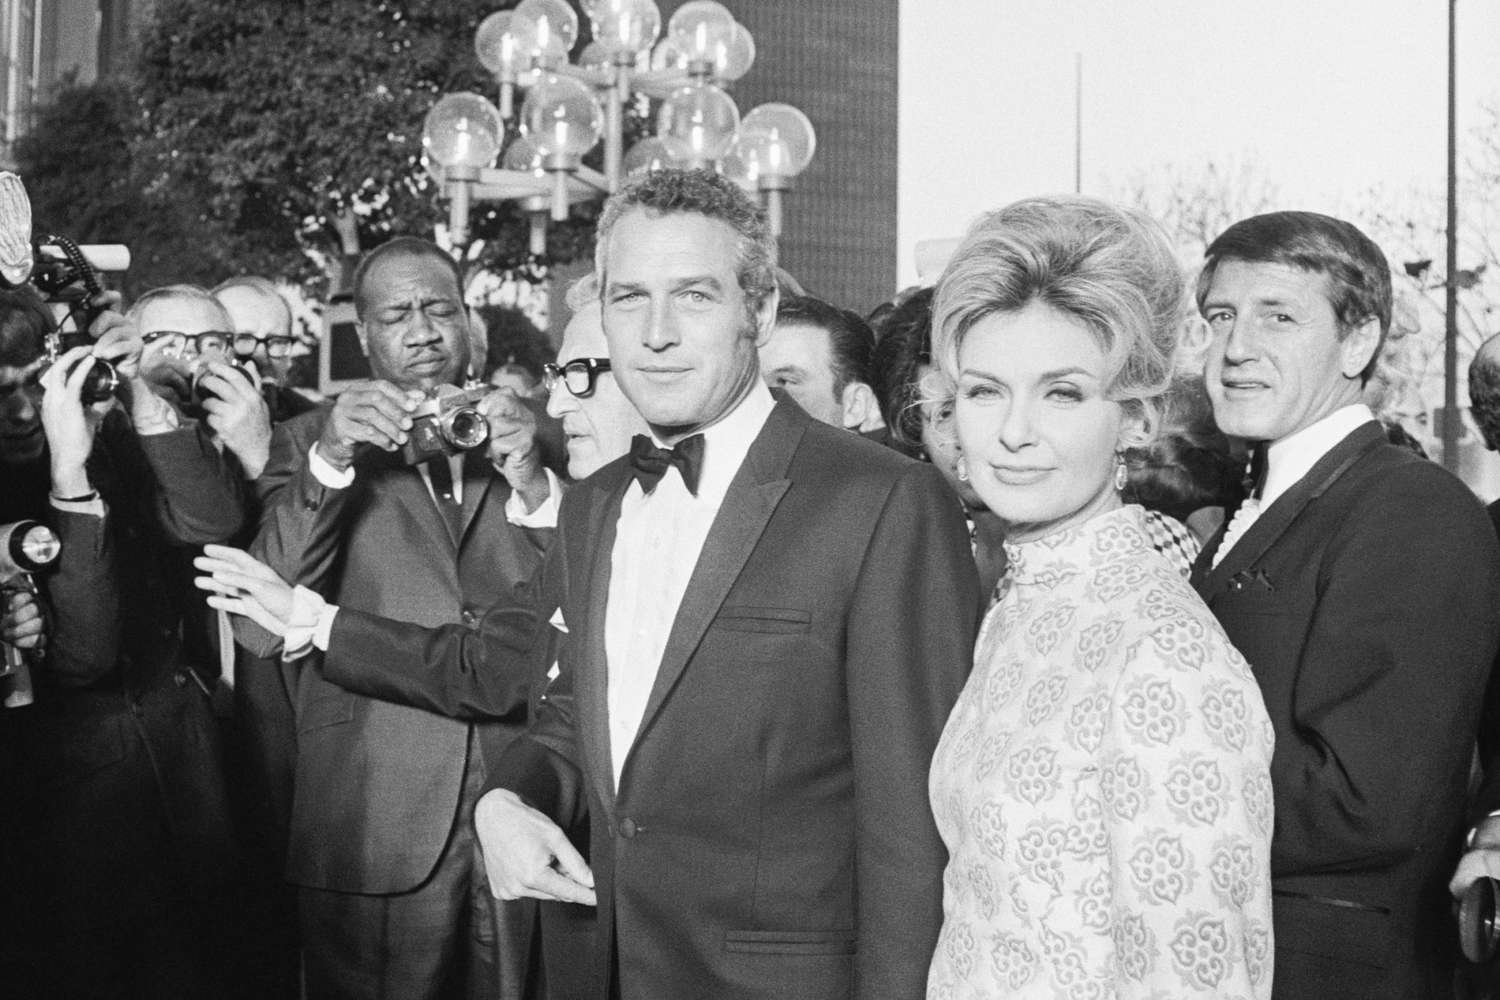 1969: Paul Newman and Joanne Woodward